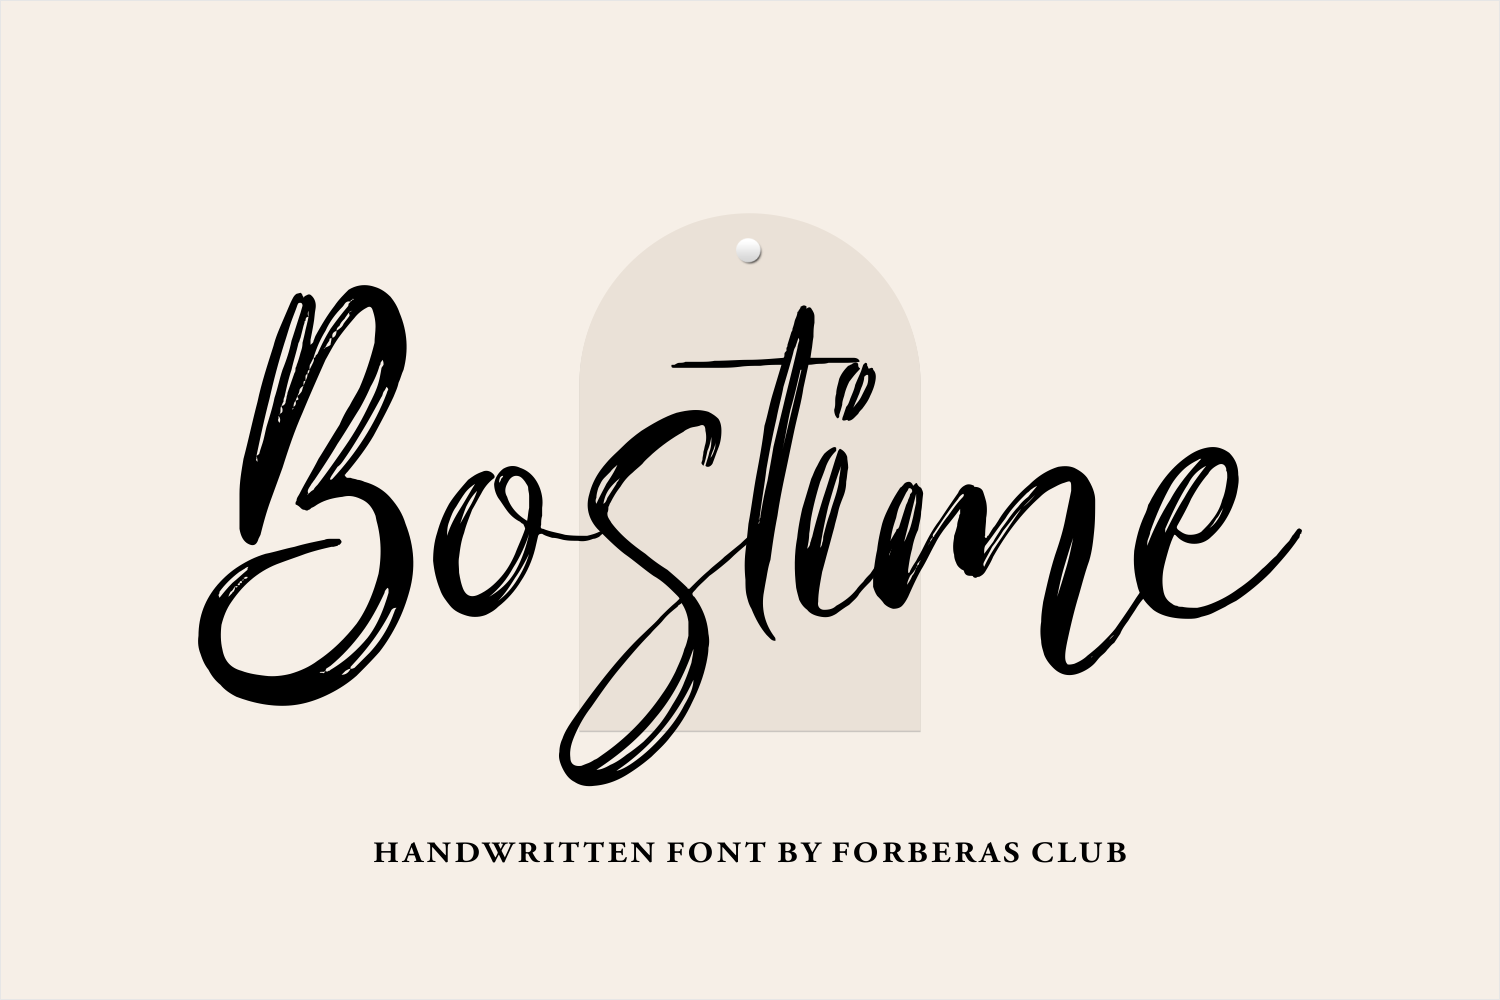 Bostime Brush Font